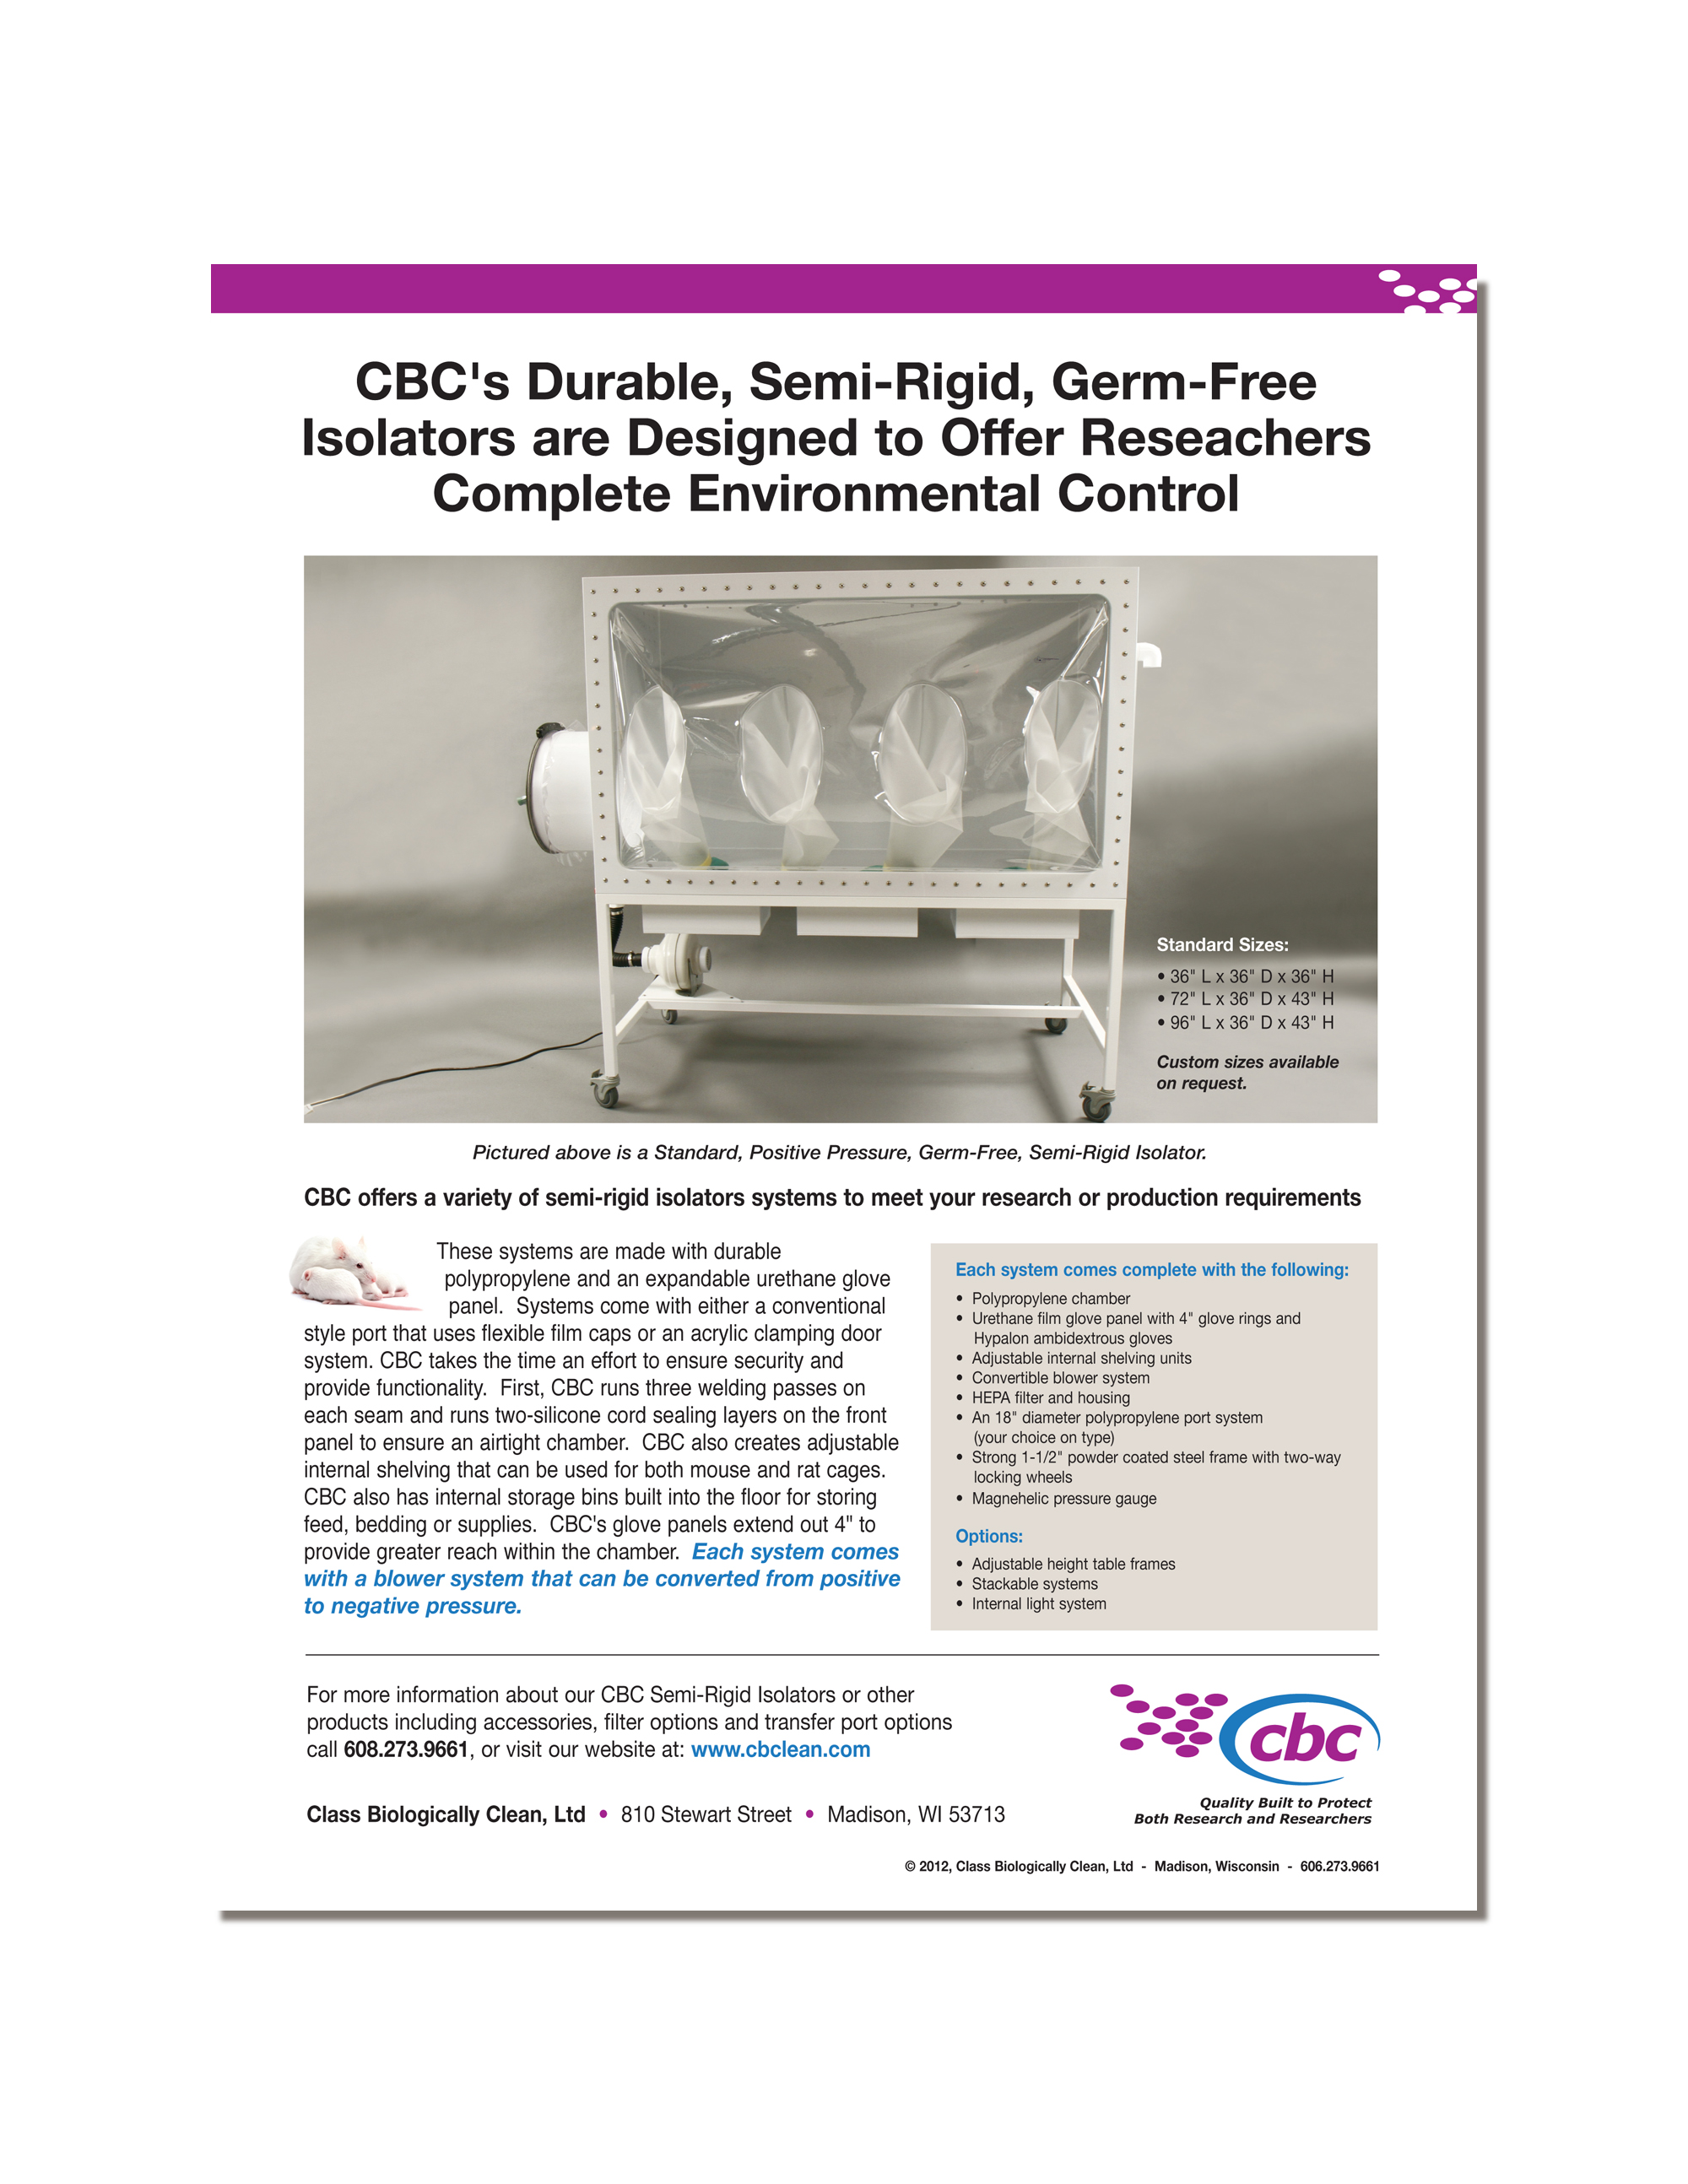 CBC Semi-Rigid gnotobiotic isolator system. Click here to download flyer.